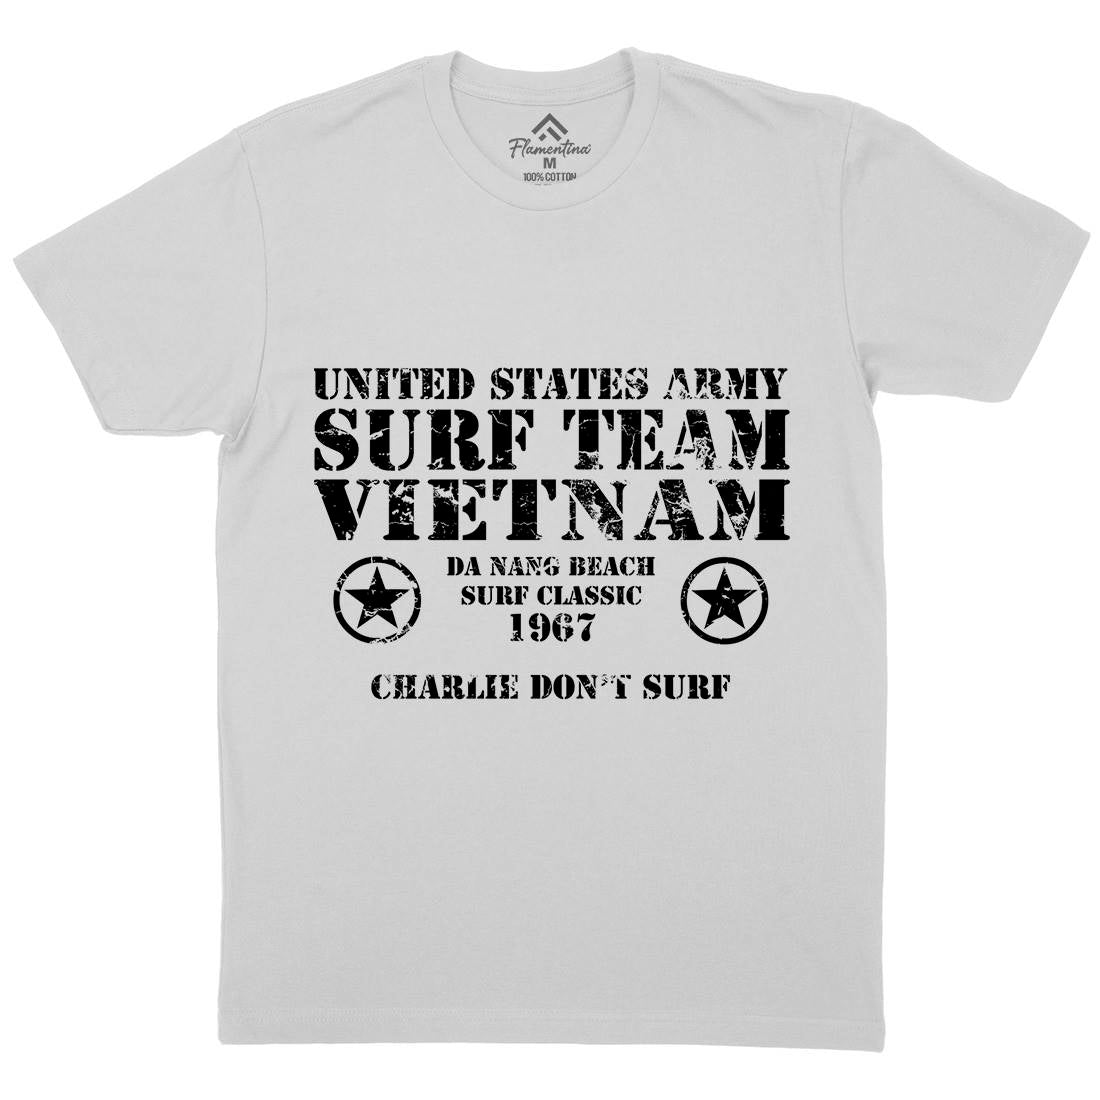 Surf Team Vietnam Mens Crew Neck T-Shirt Army D438